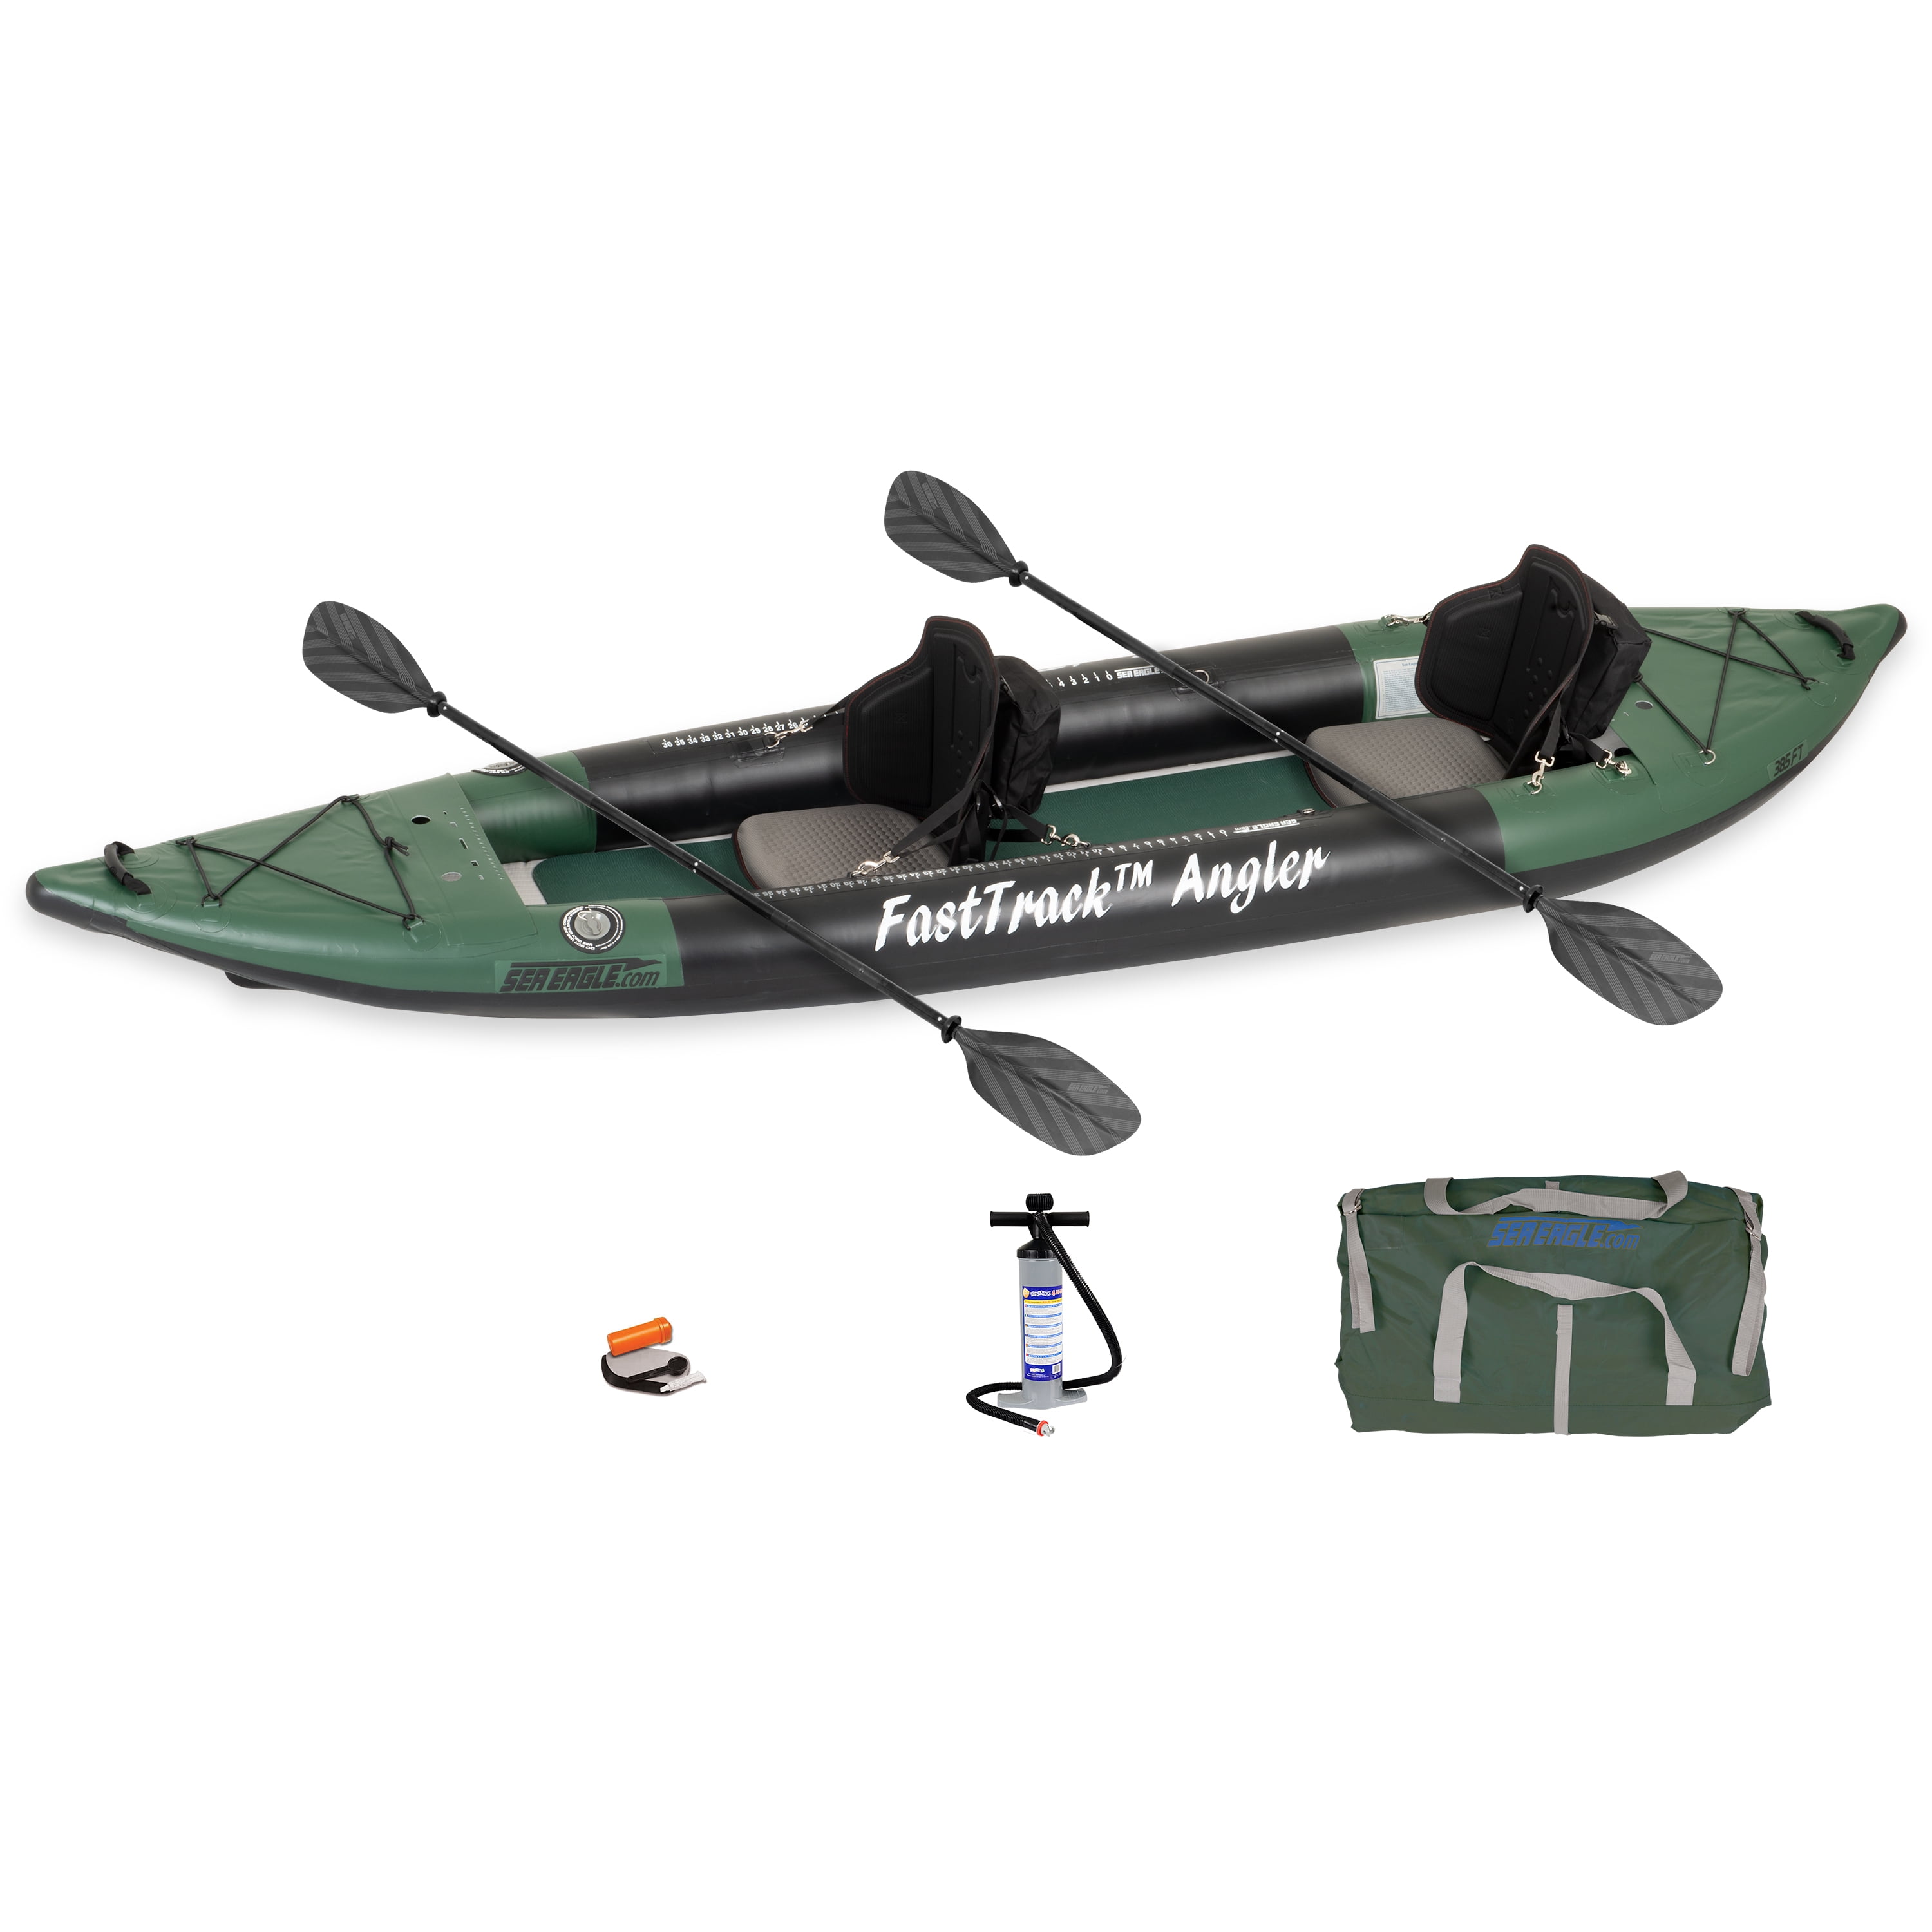 Lifetime Tahoma Angler 123 inch Sit-on-Top Fishing Kayak, Aurora